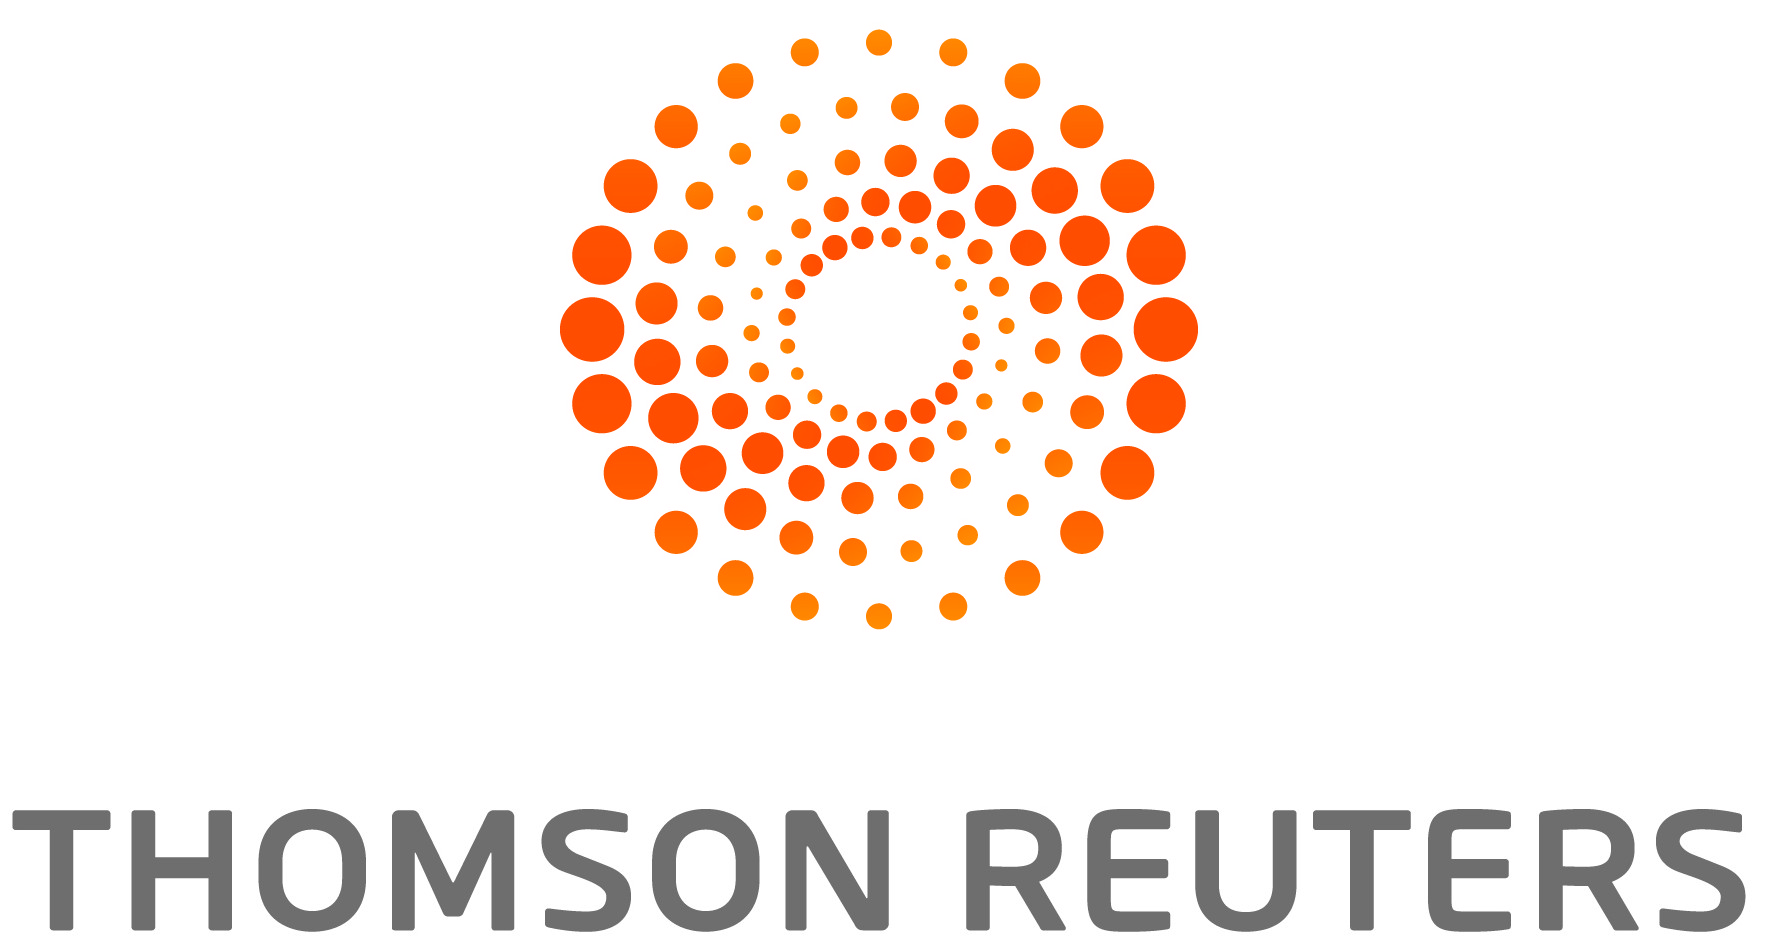 Thomson Reuters Brand Logo